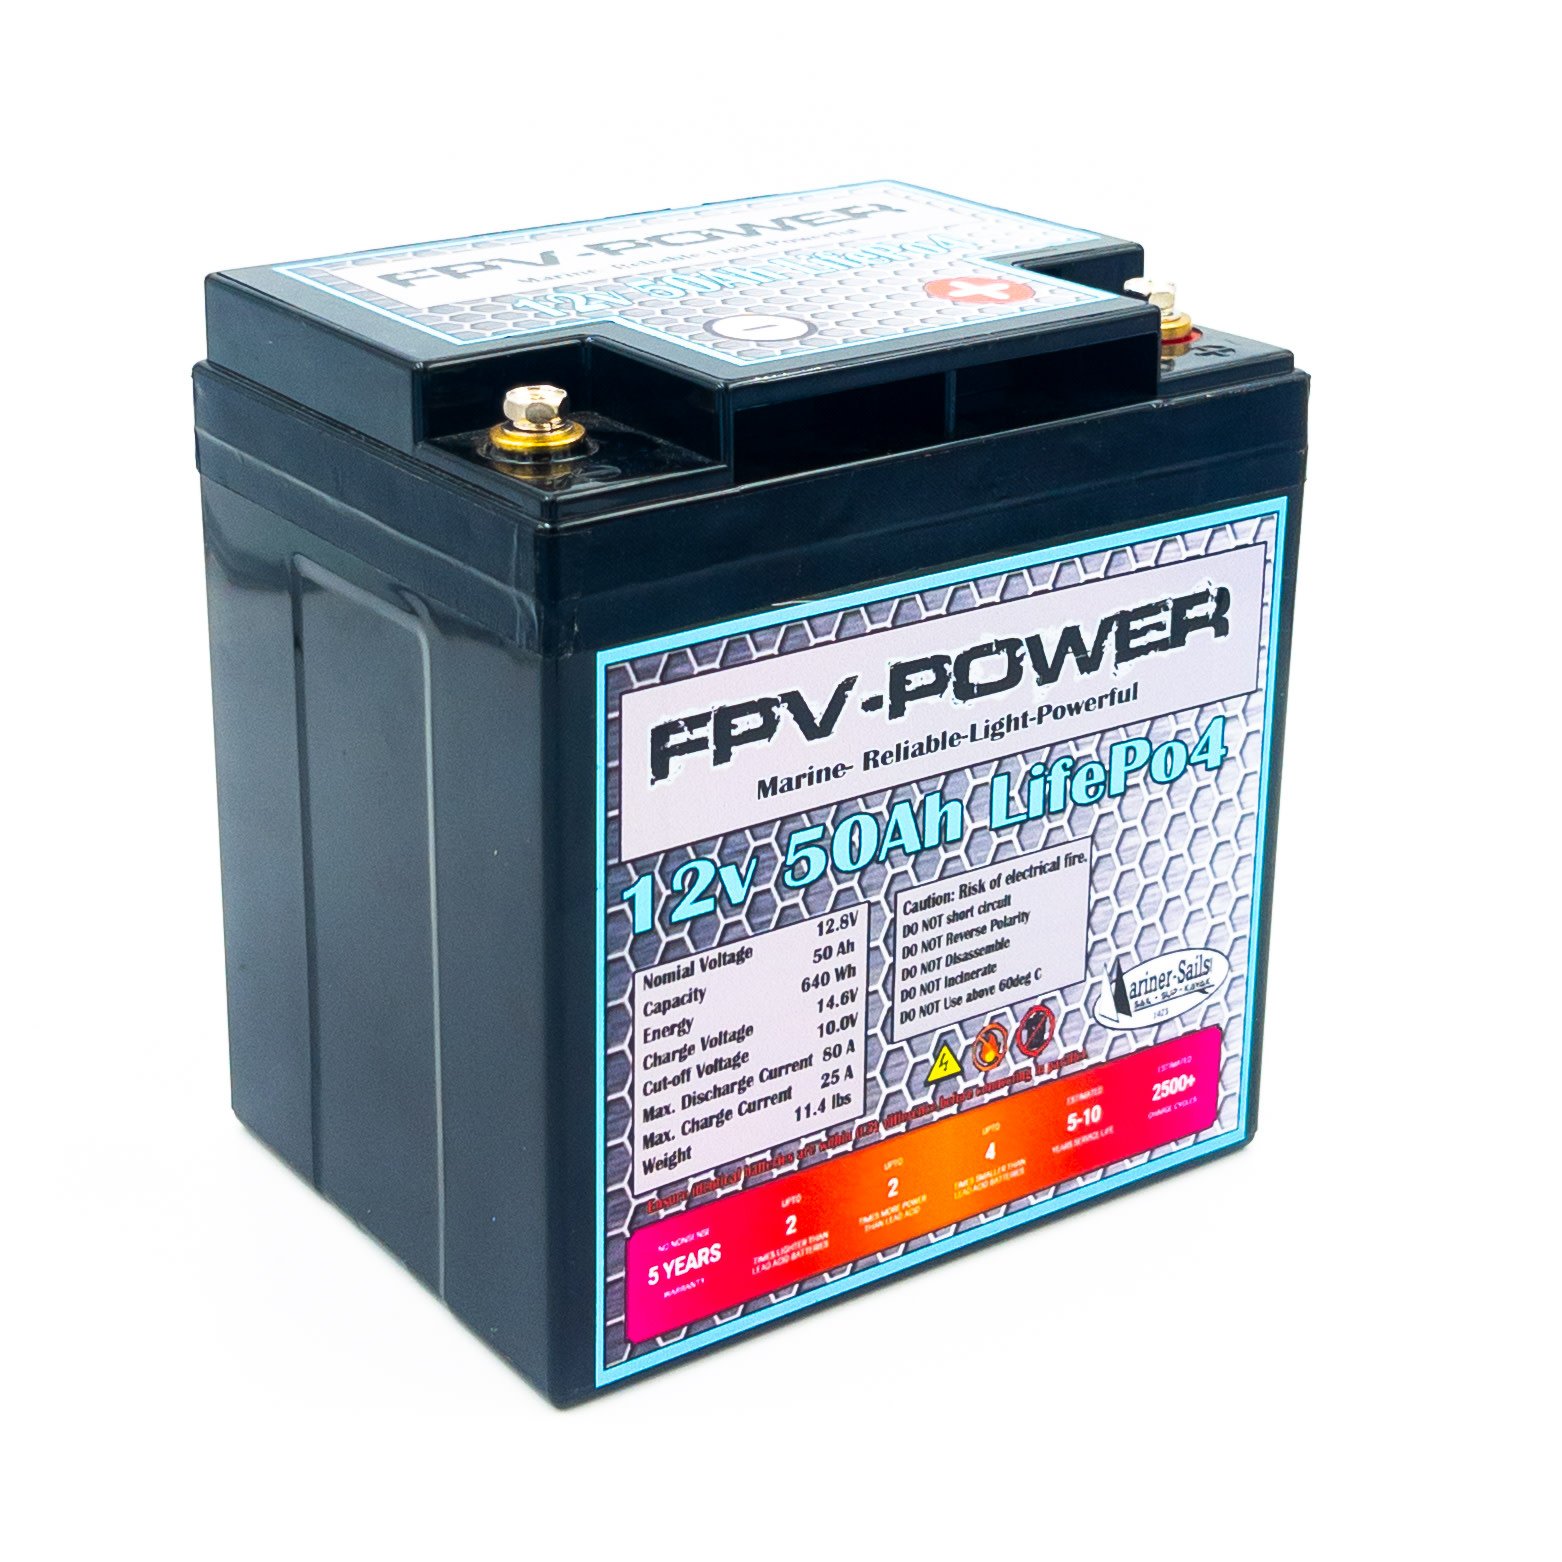 P04Power 12V 50Ah LifeP04 Battery